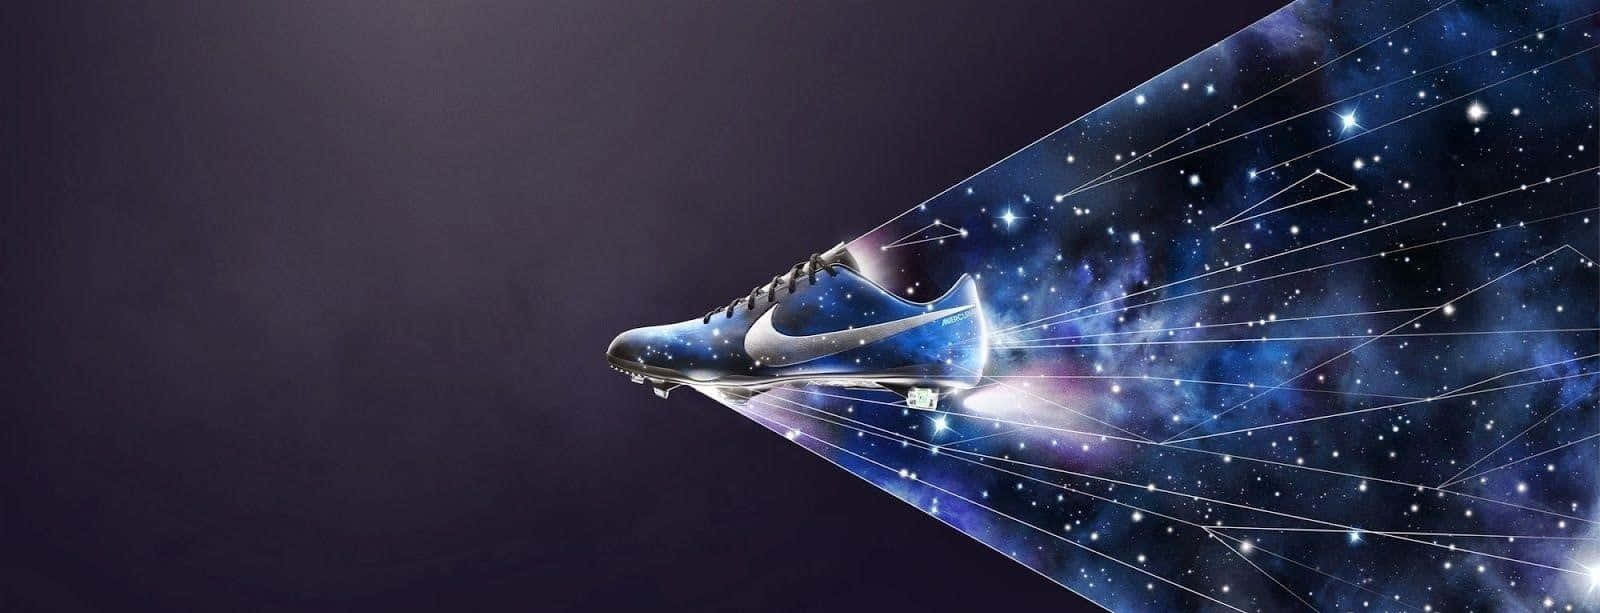 Mercurialvapor Nike Galaxy Abstraktes Design Wallpaper